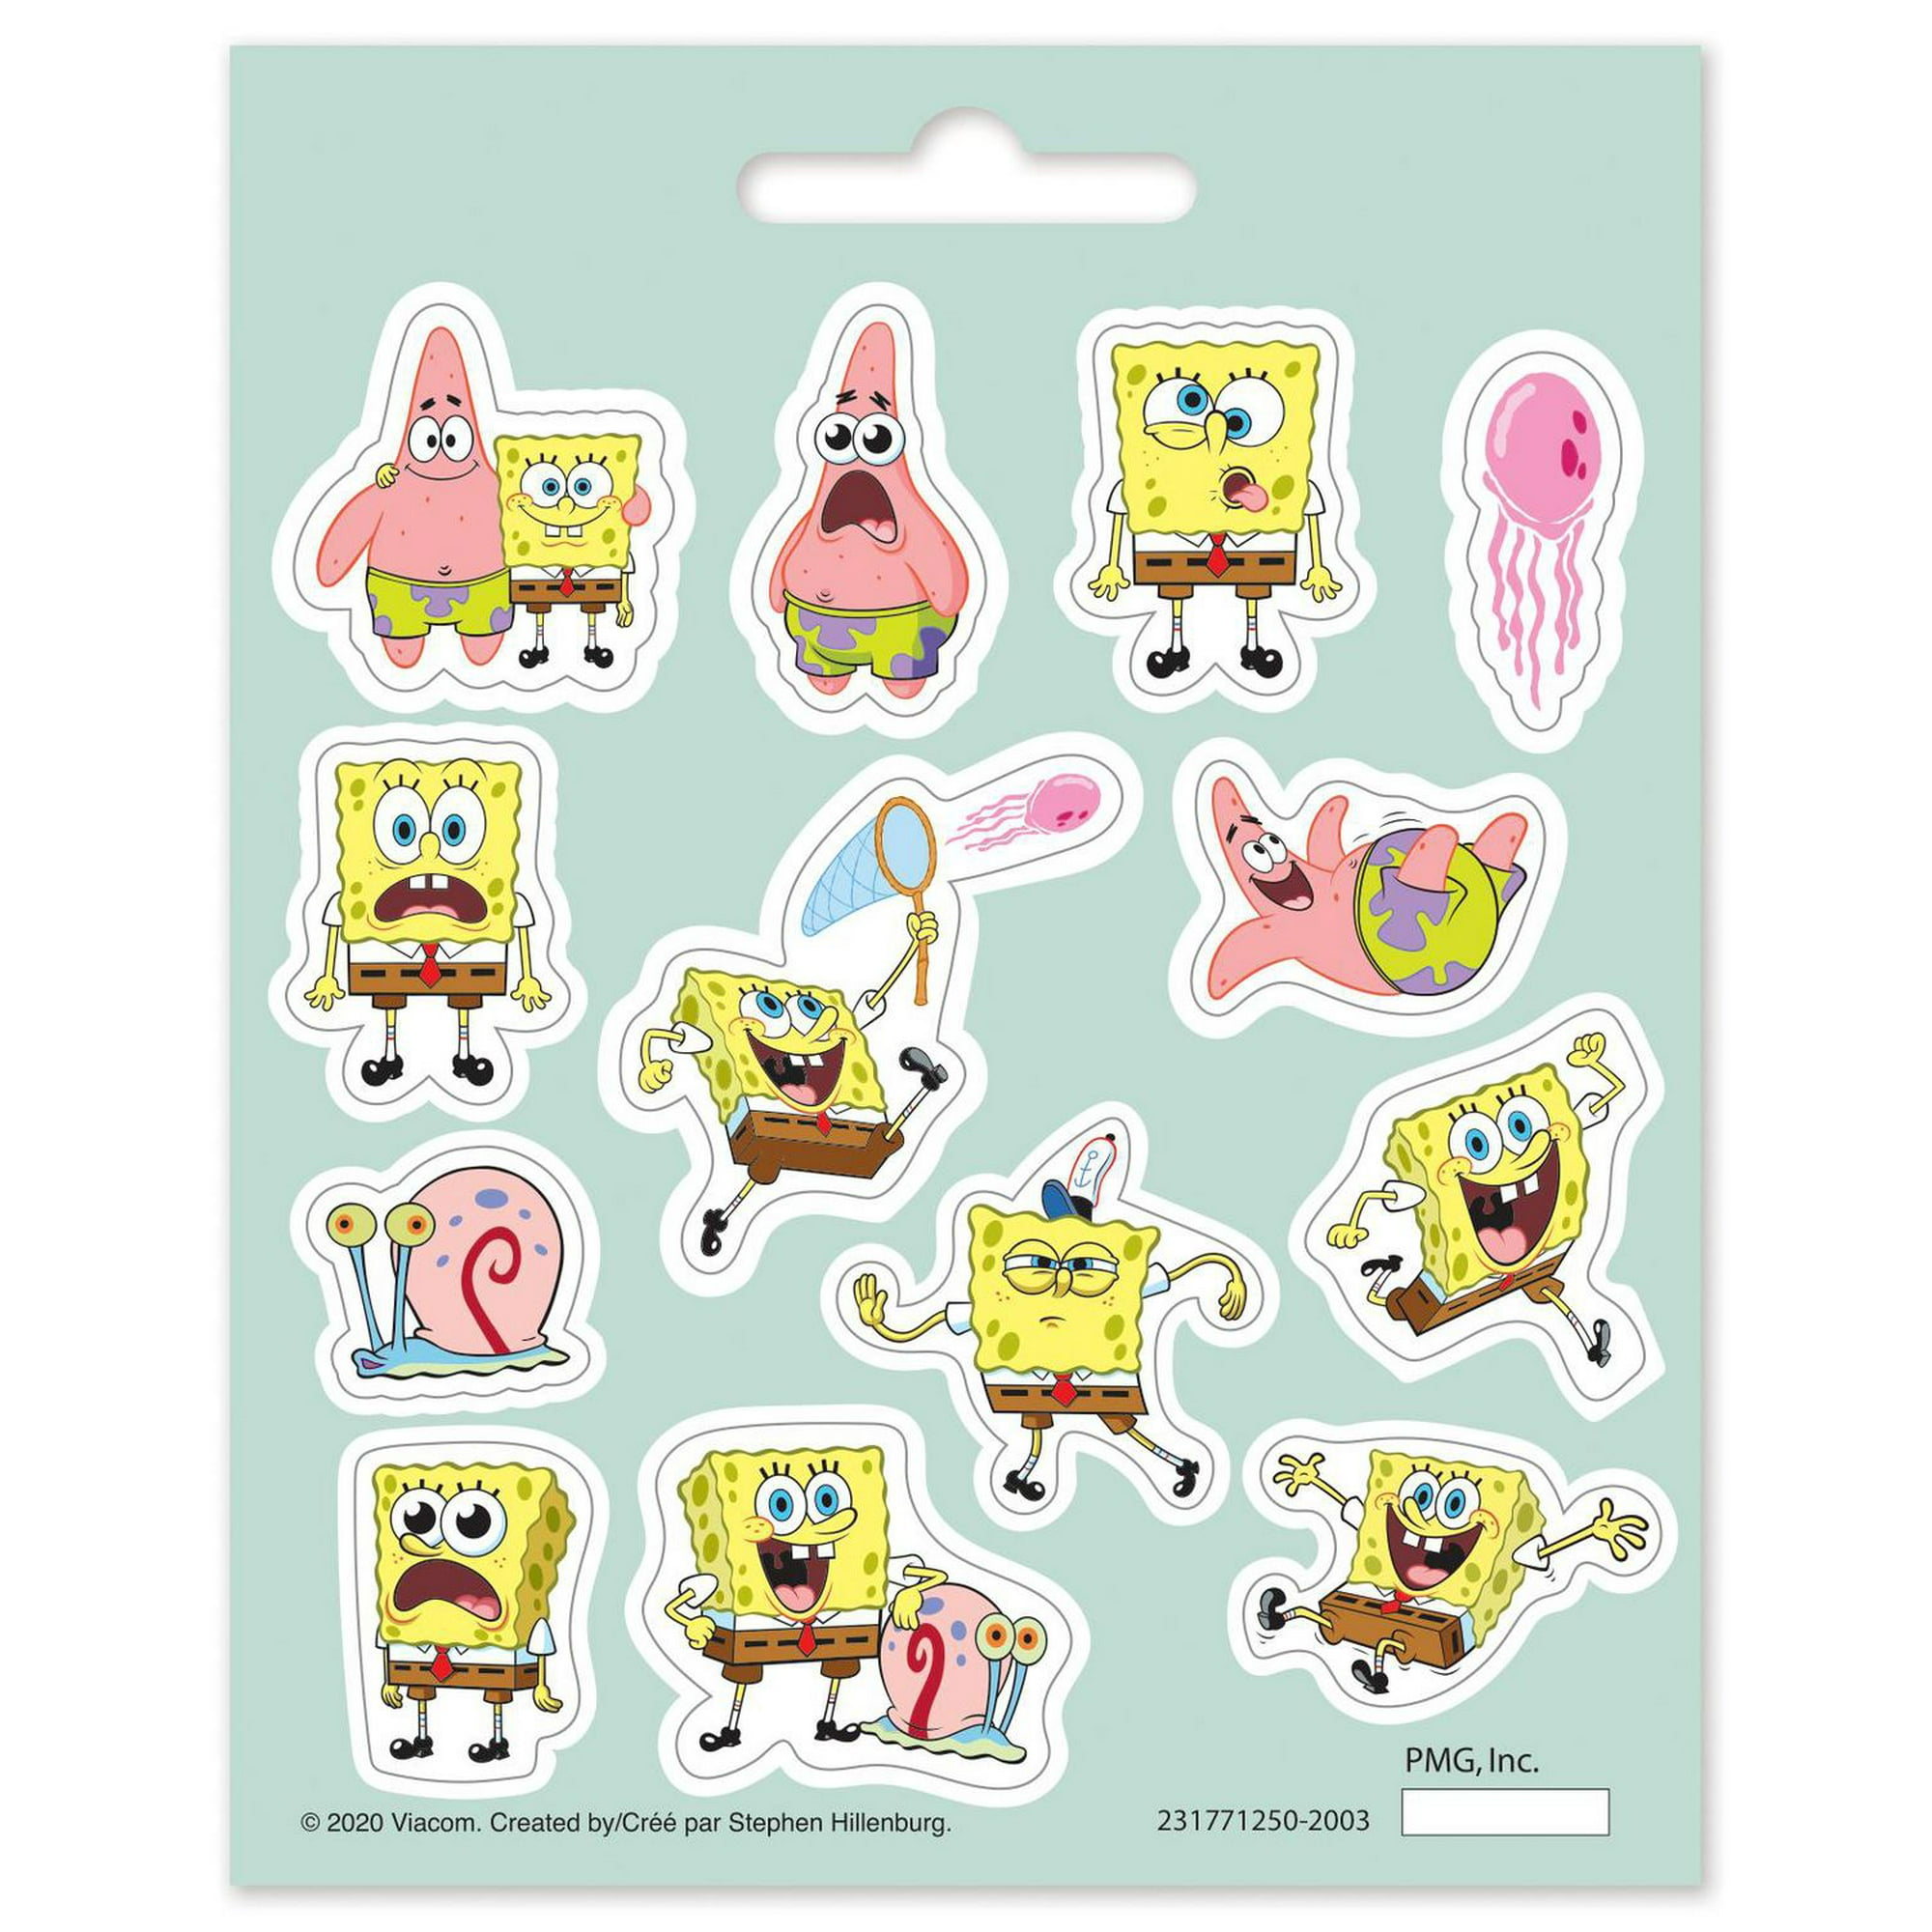 The SpongeBob SquarePants Sticker Bundle